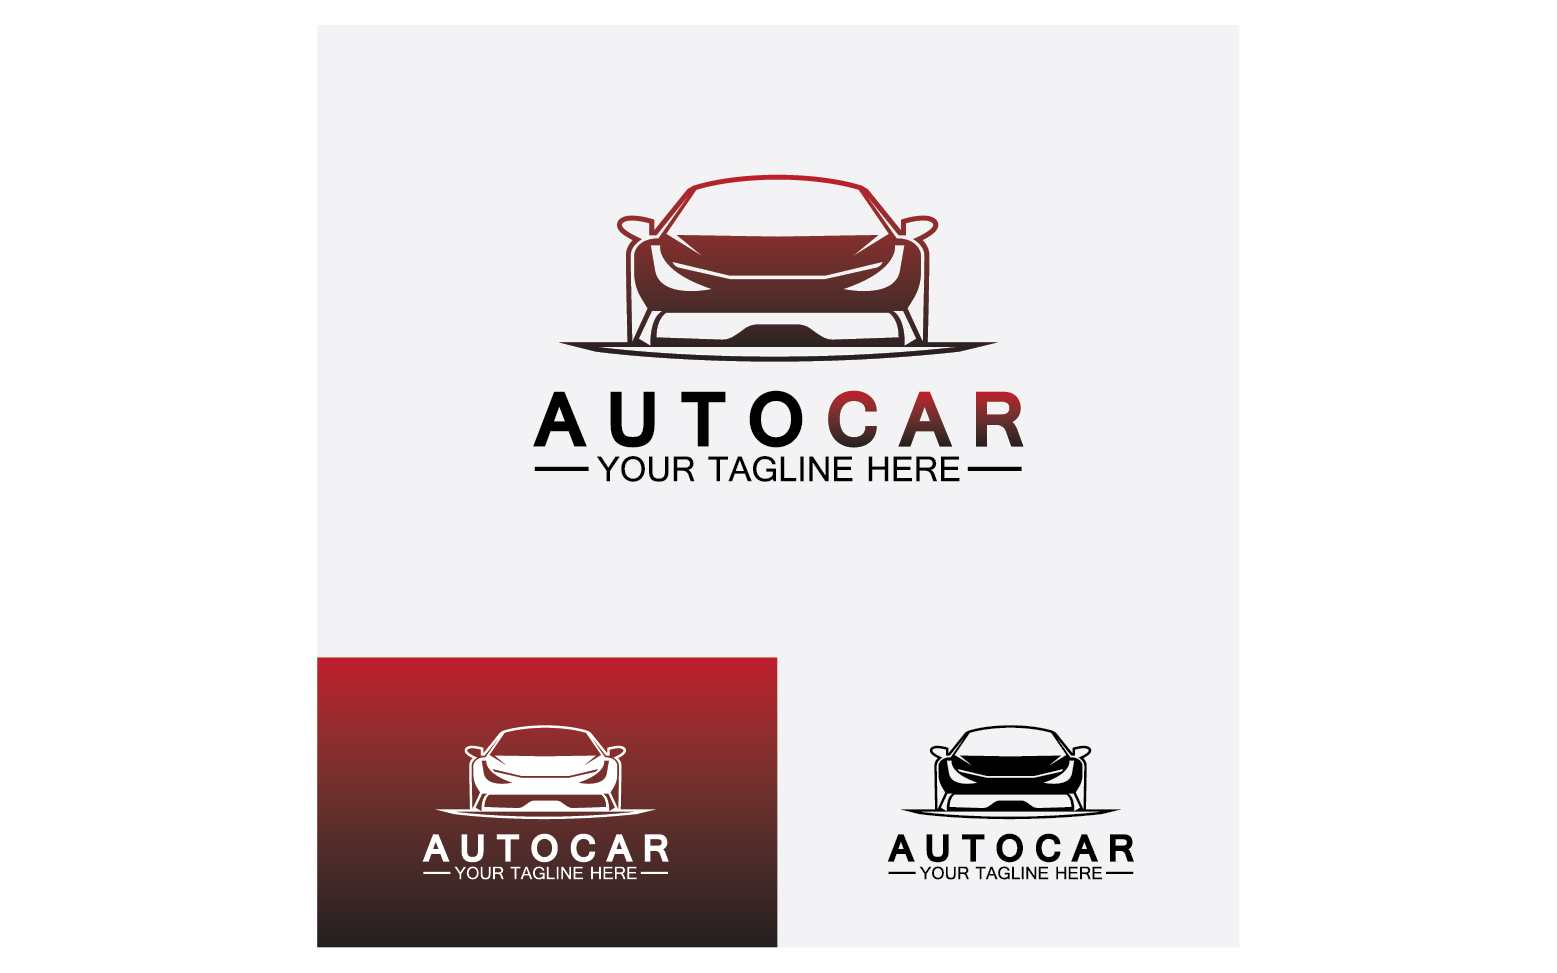 Cars dealer, automotive, autocar logo design inspiration. v32